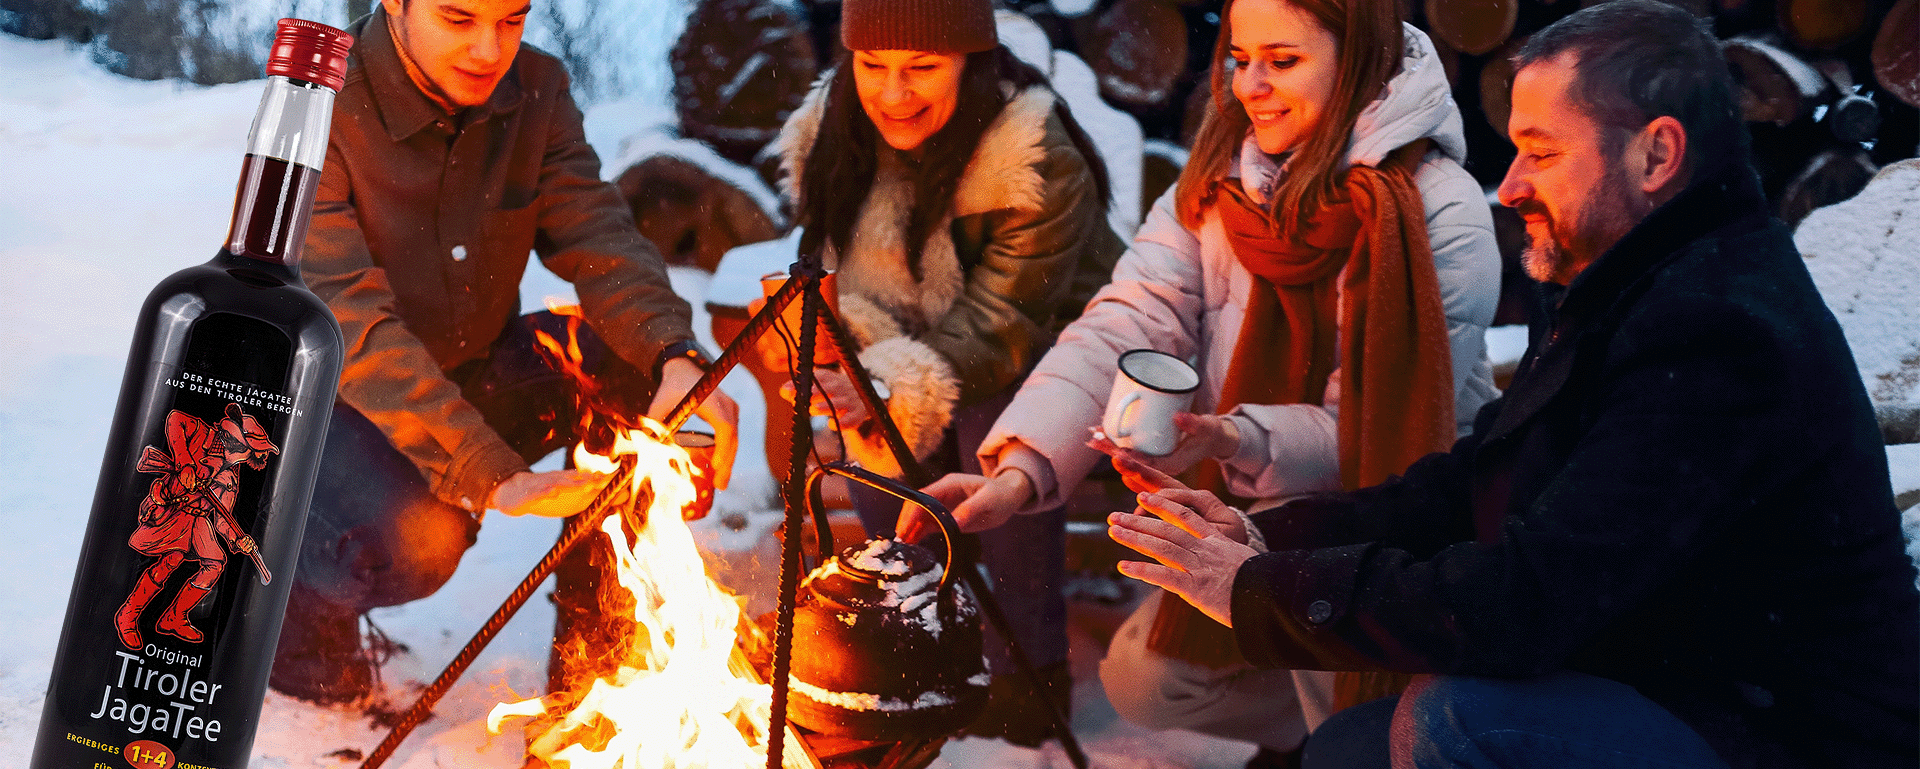 Menschen am Lagerfeuer mit Original Tiroler Jagertee